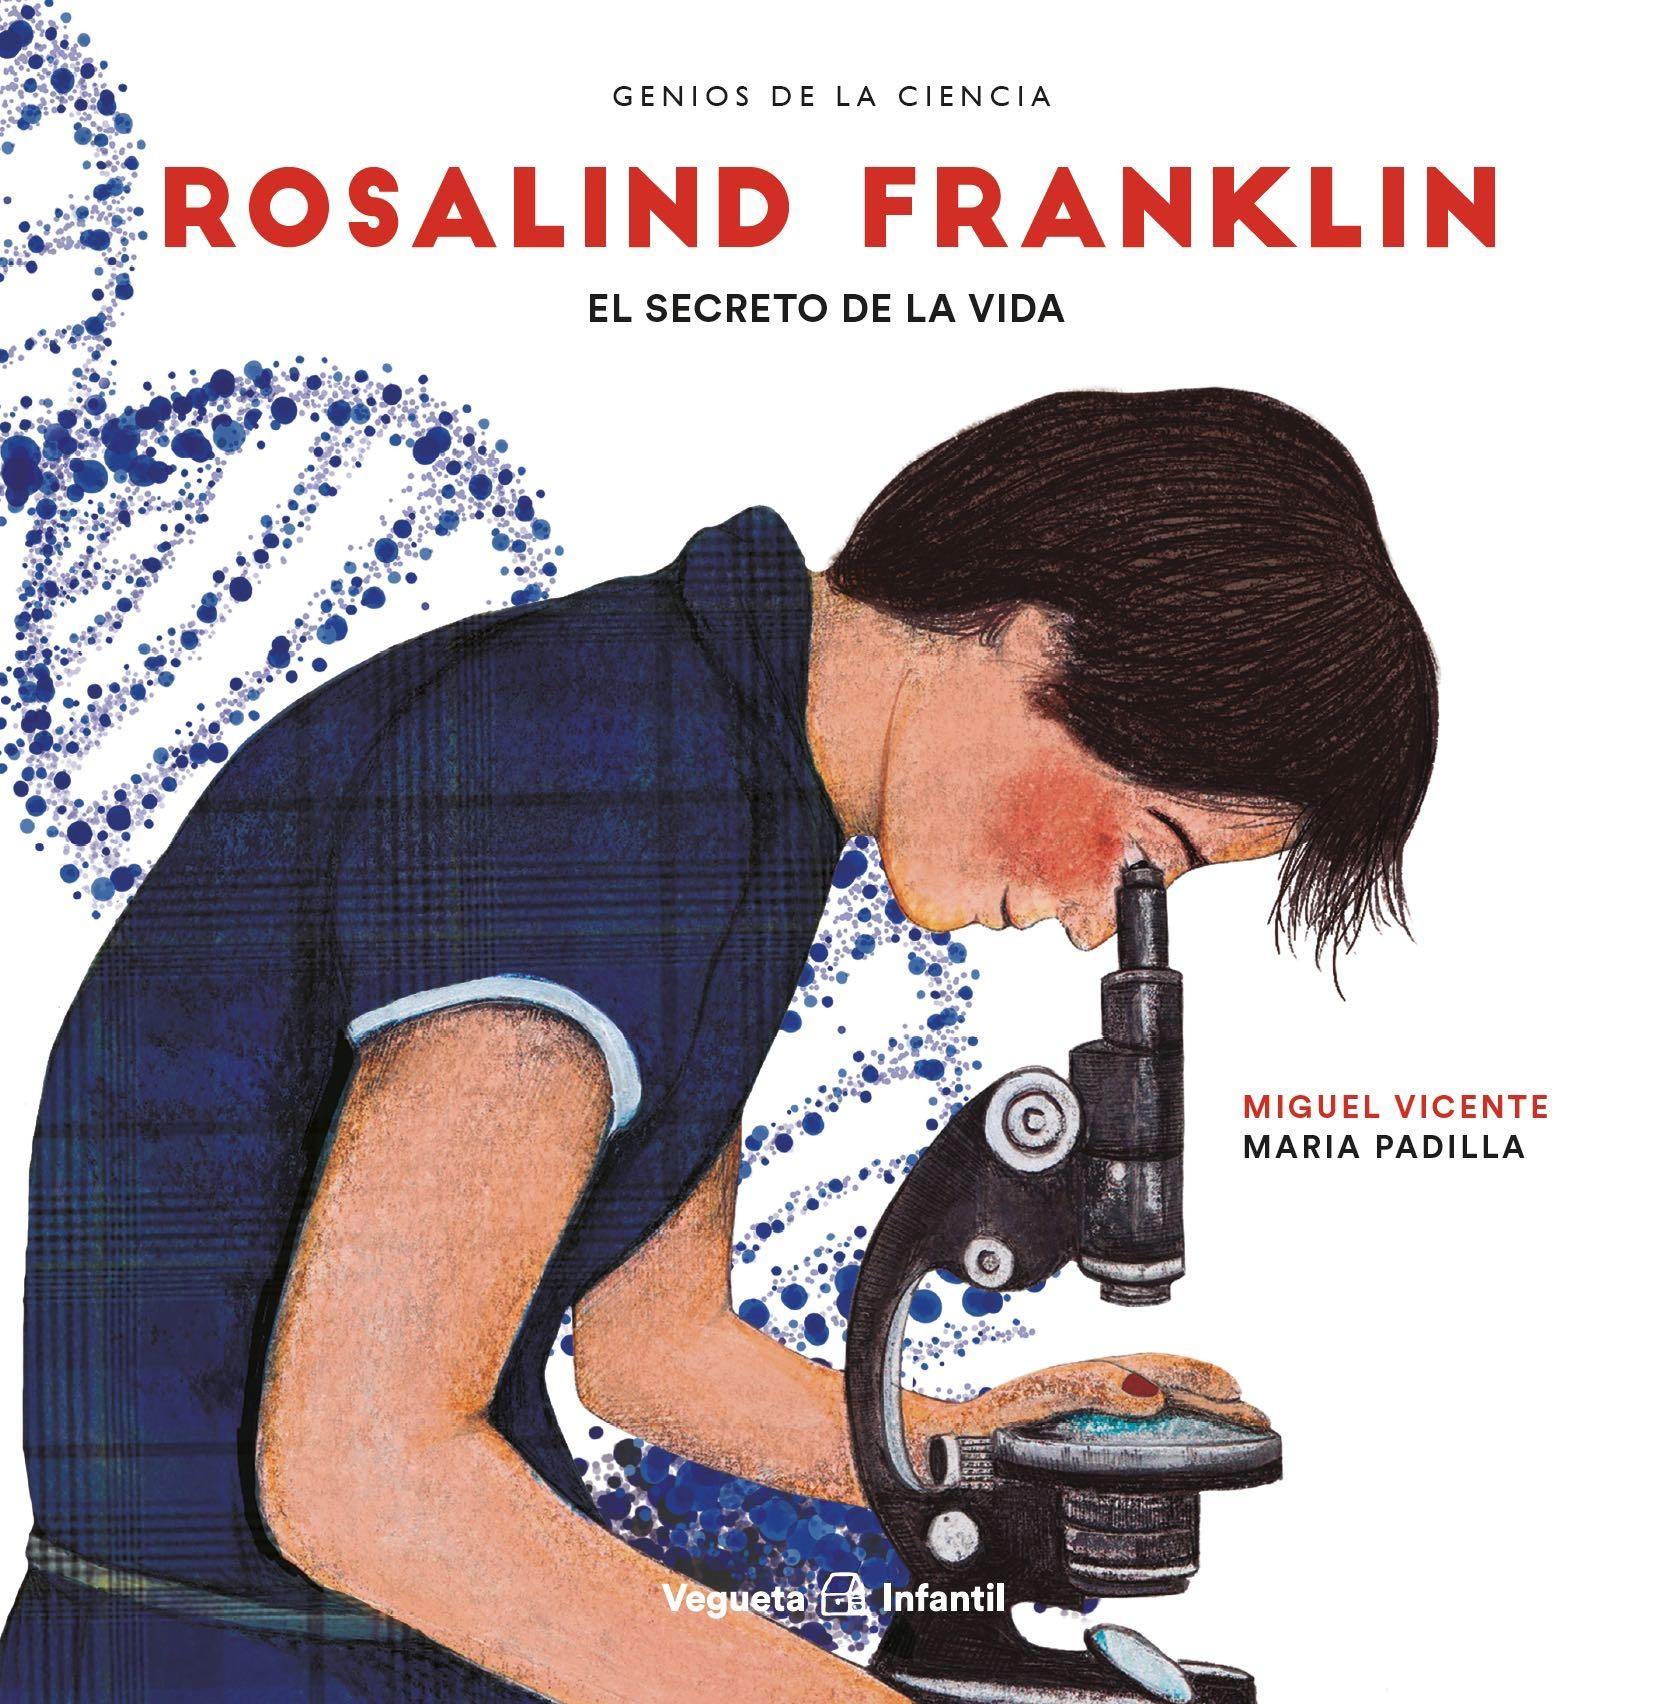 Rosalind Franklin "El Secreto de la Vida"